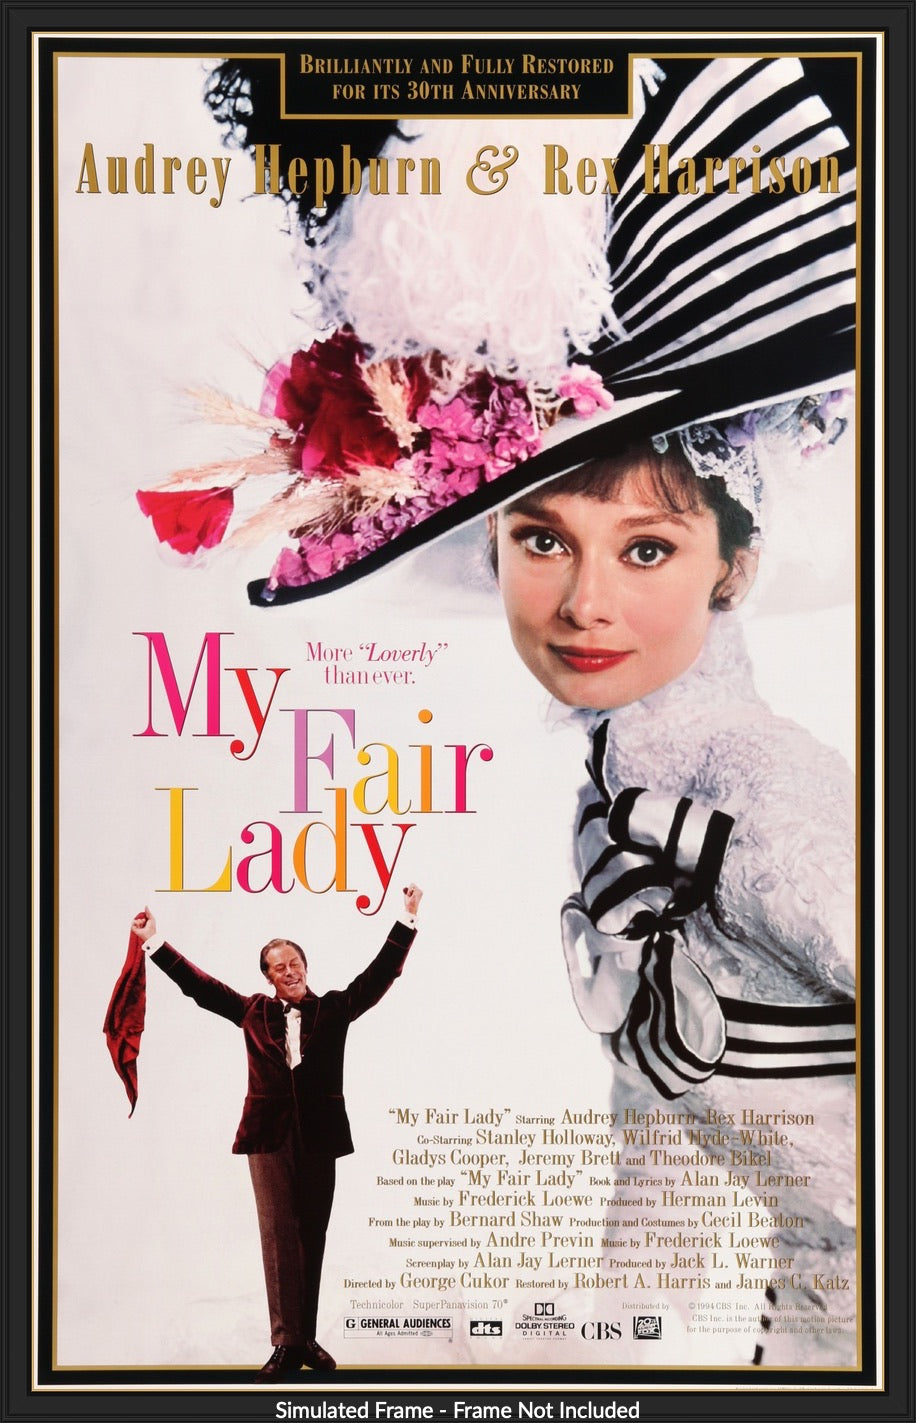 [Fshare] My Fair Lady (1964) 2160p Bluray Remux Dolby Vision HEVC